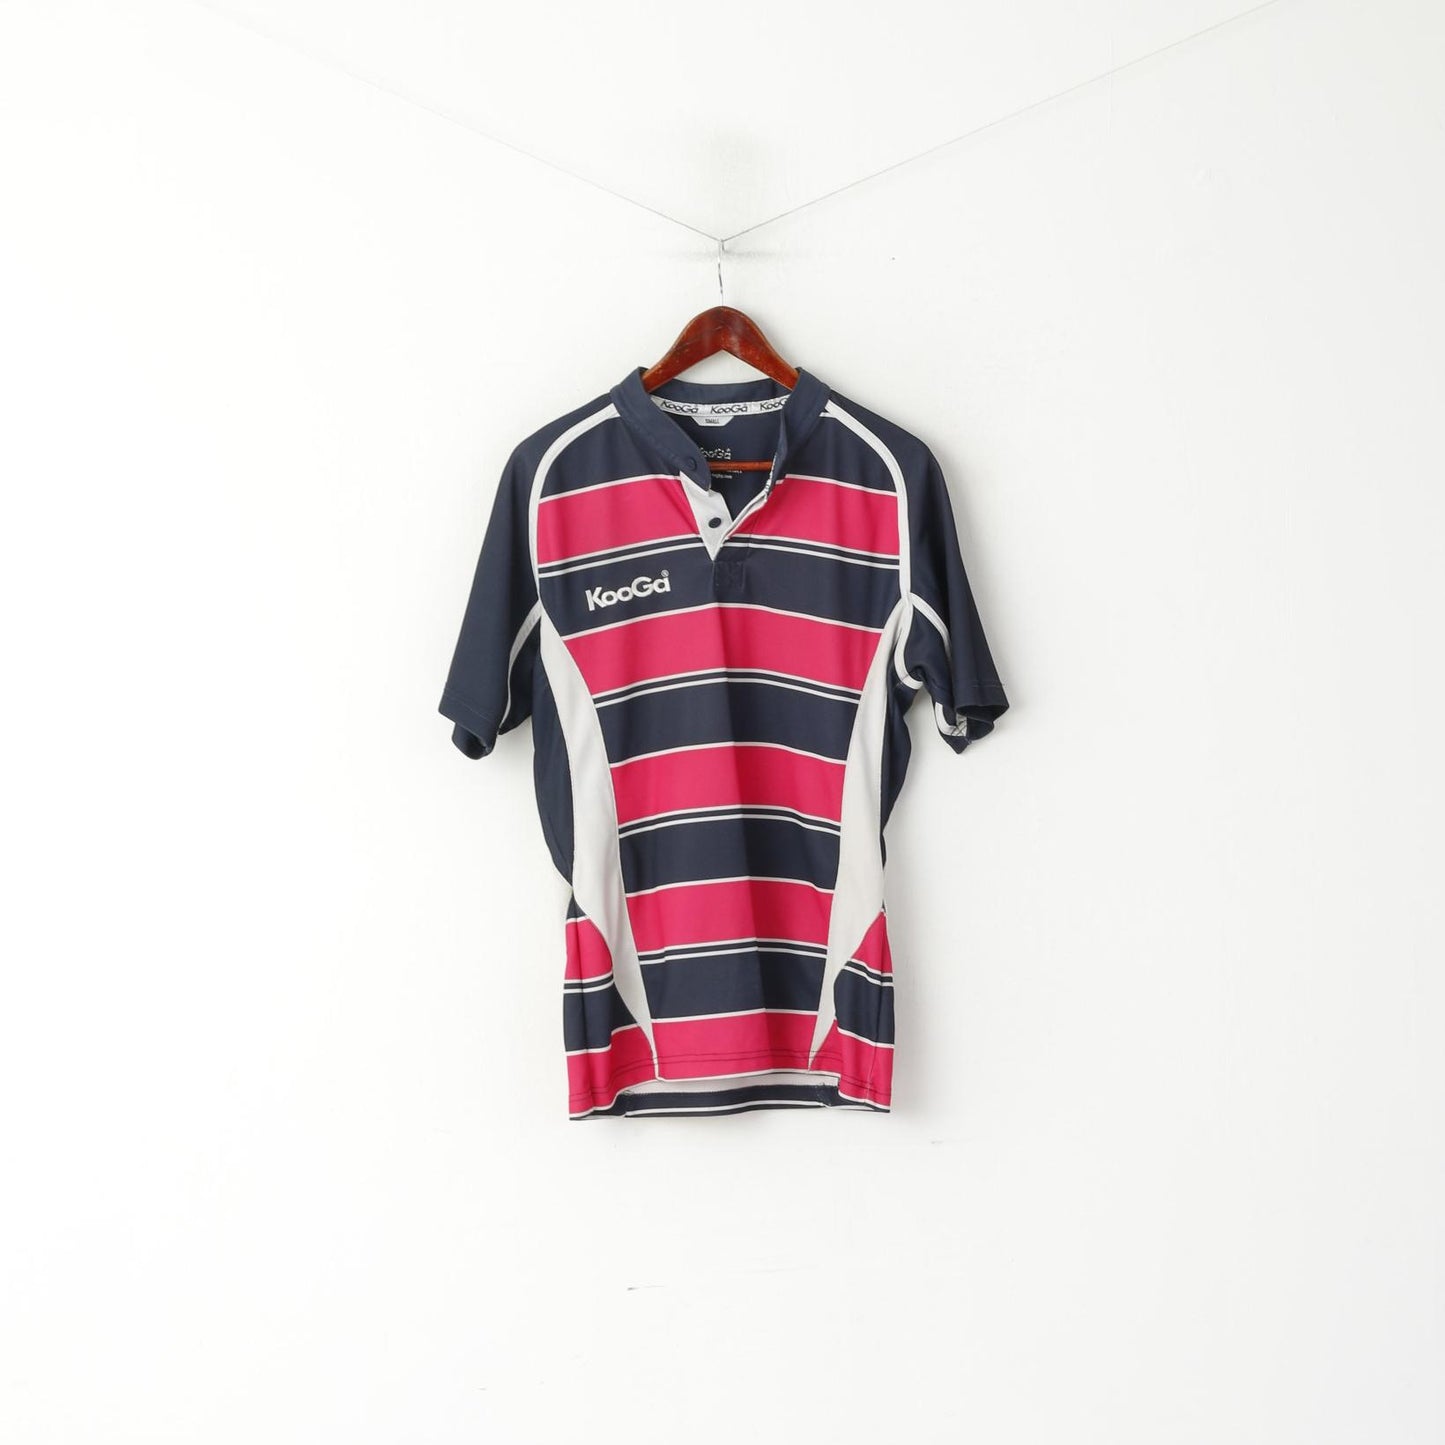 KooGa Men S Shirt Navy Pink Striped Rugby Official Match Jersey Top